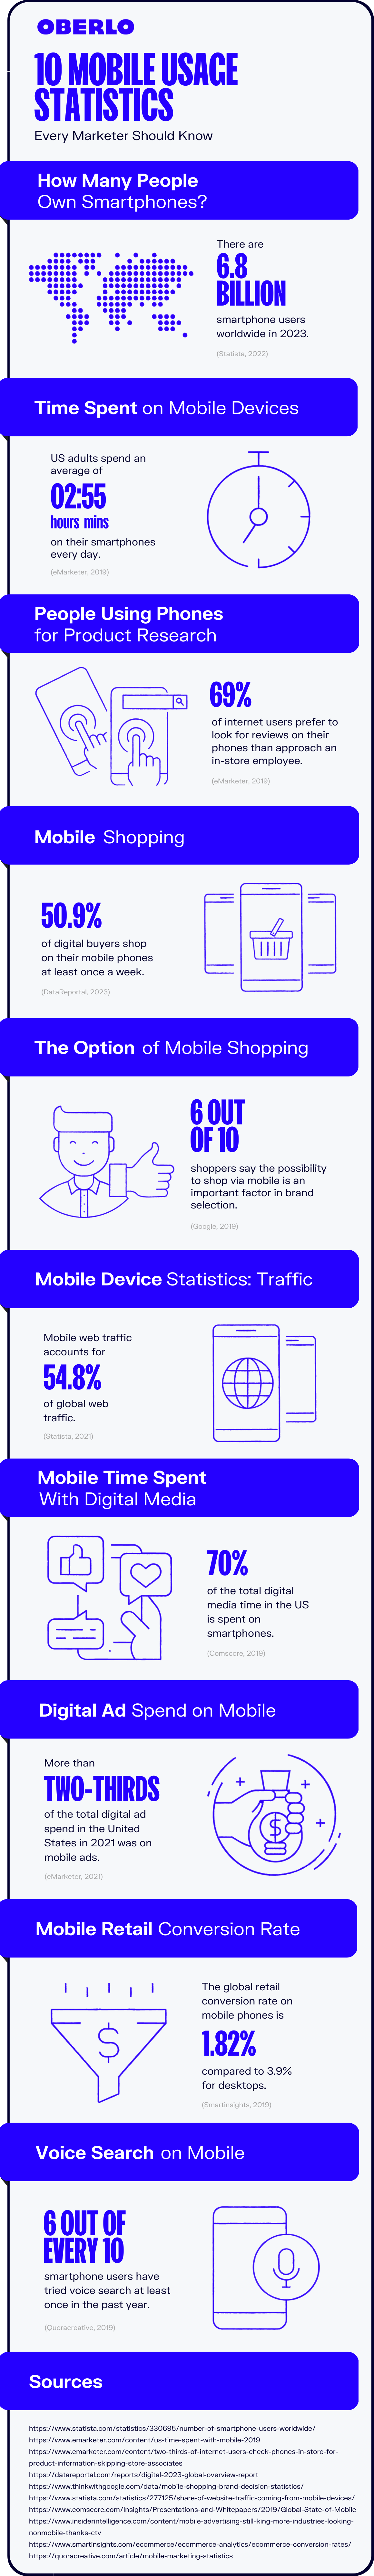 mobile usage statistics full infographic